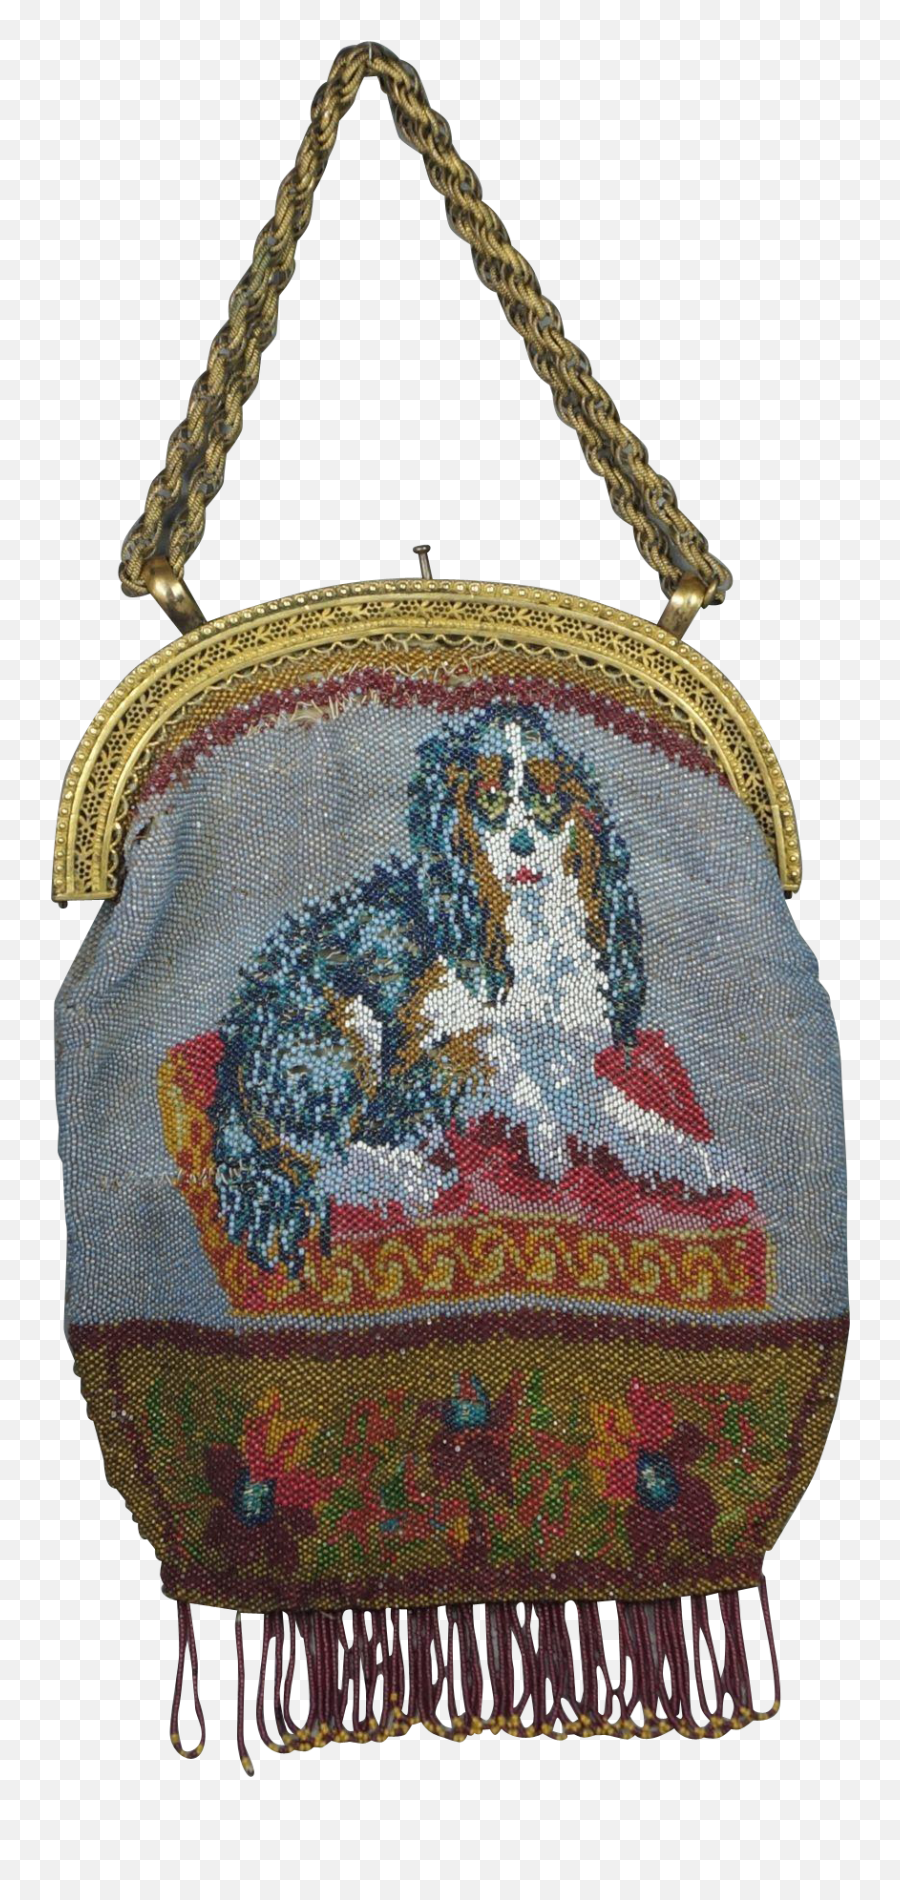 King Charles Spaniel - Top Handle Handbag Emoji,Embroidery To.ear Emotions